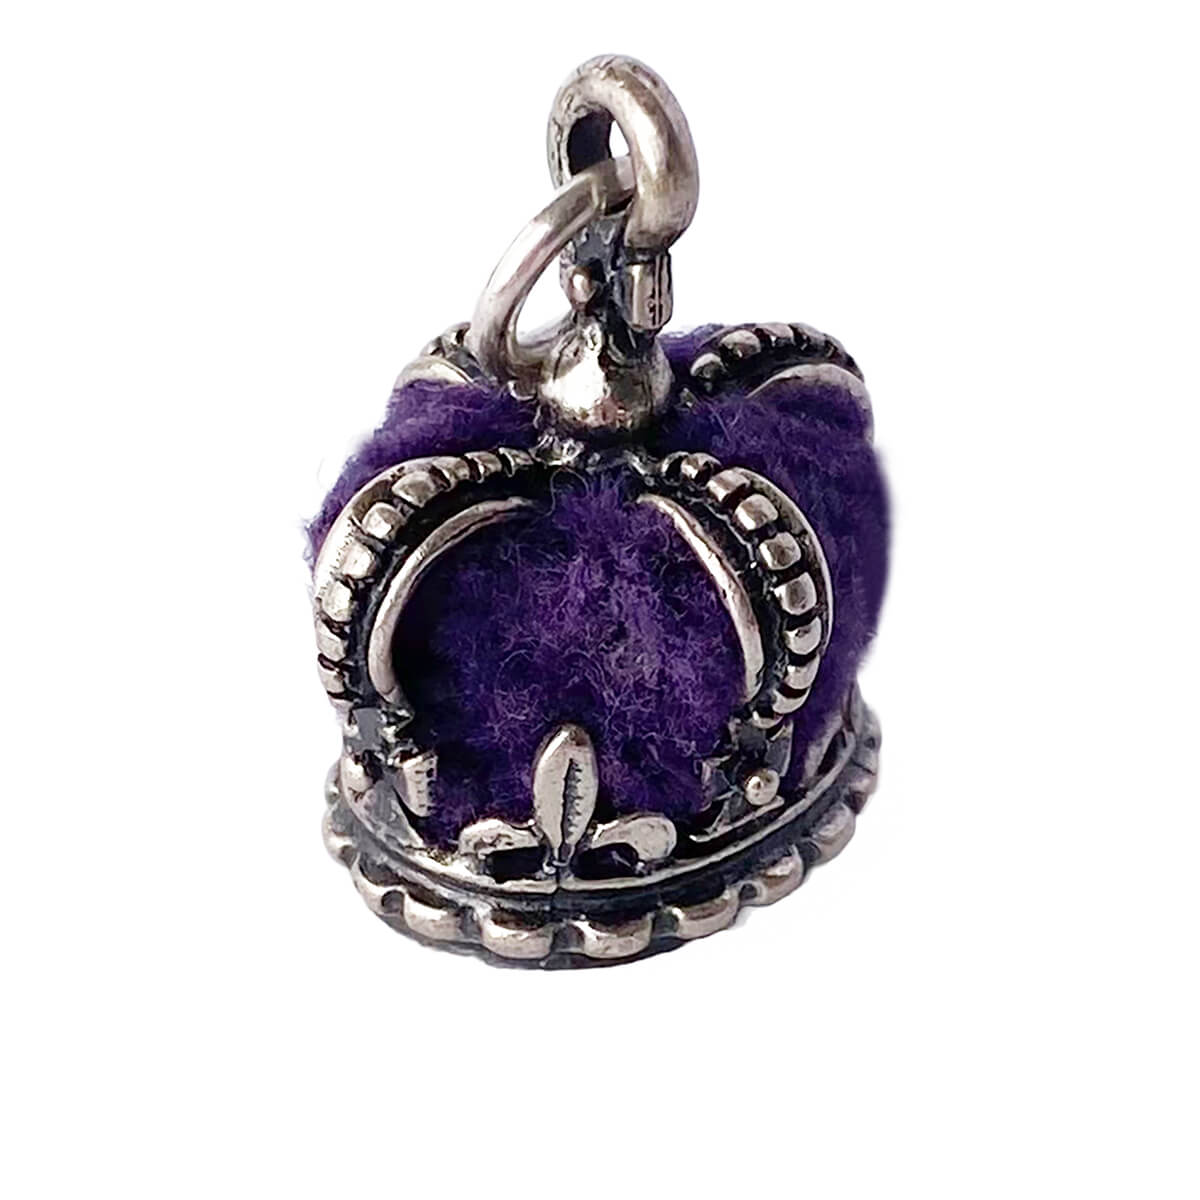 Vintage Beaucraft crown charm with purple velvet